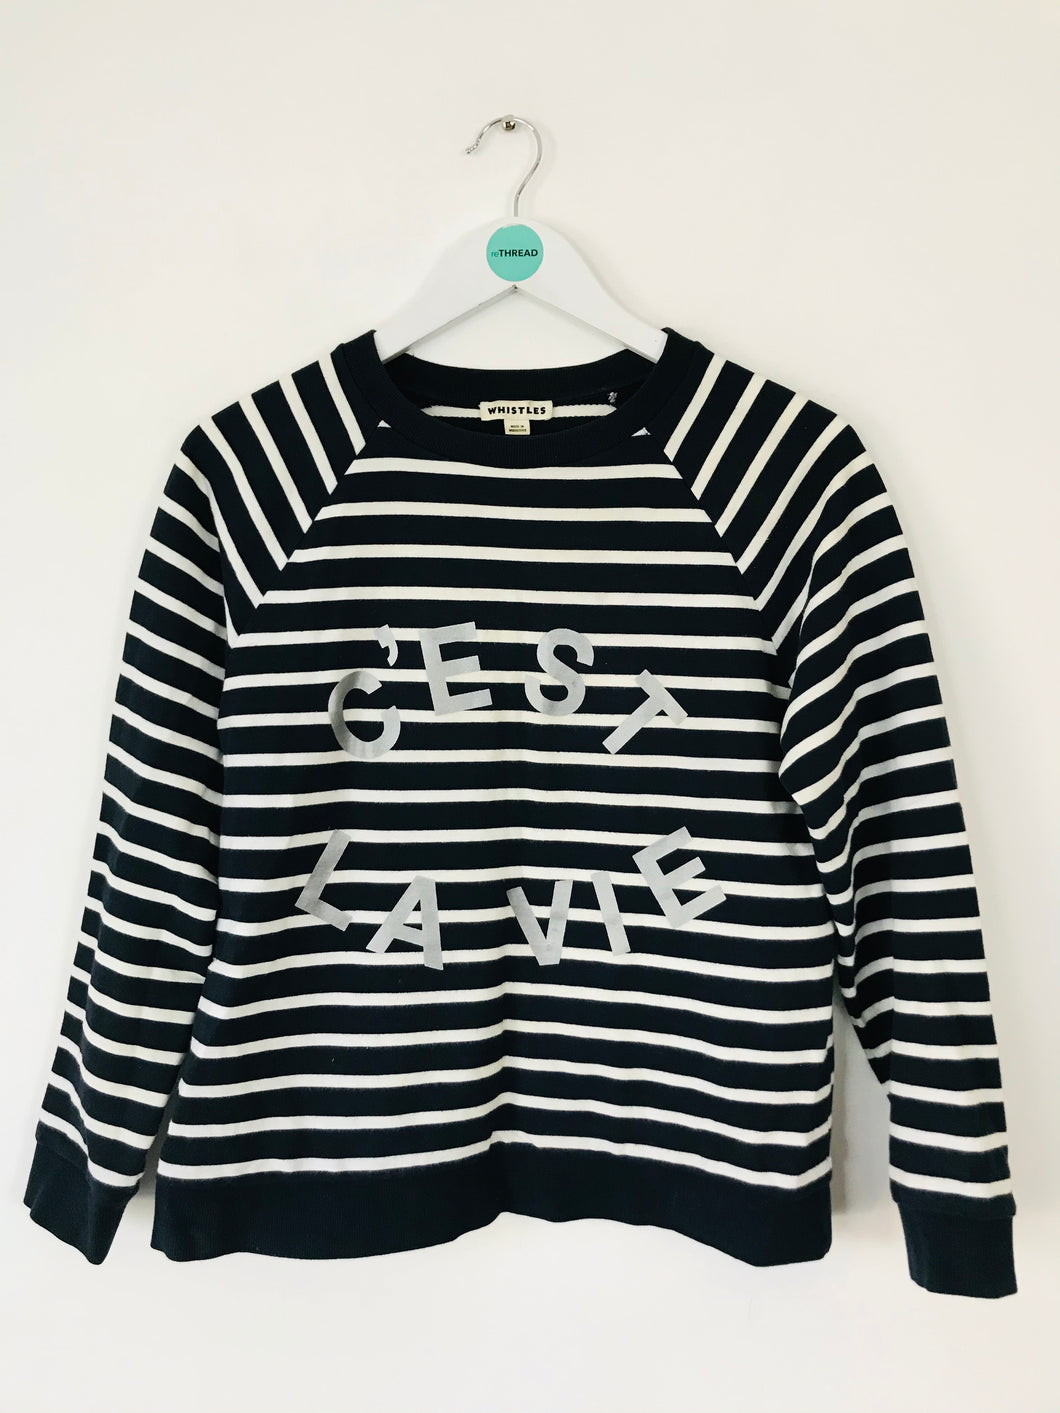 Whistles Women’s Striped C'est La Vie Sweatshirt Jumper | M UK10-12 | Navy